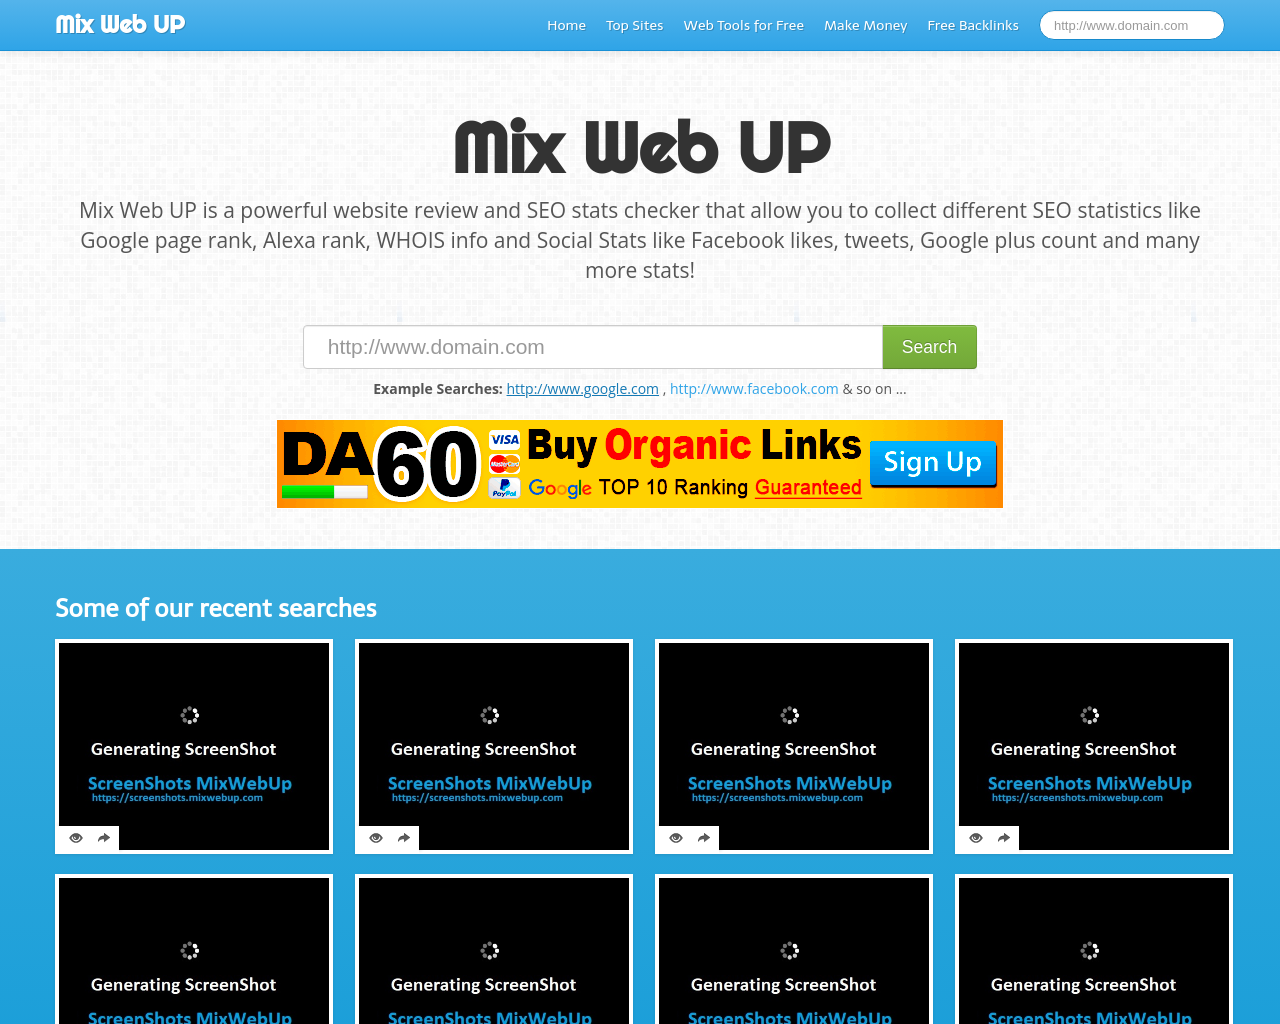 mixwebup.com